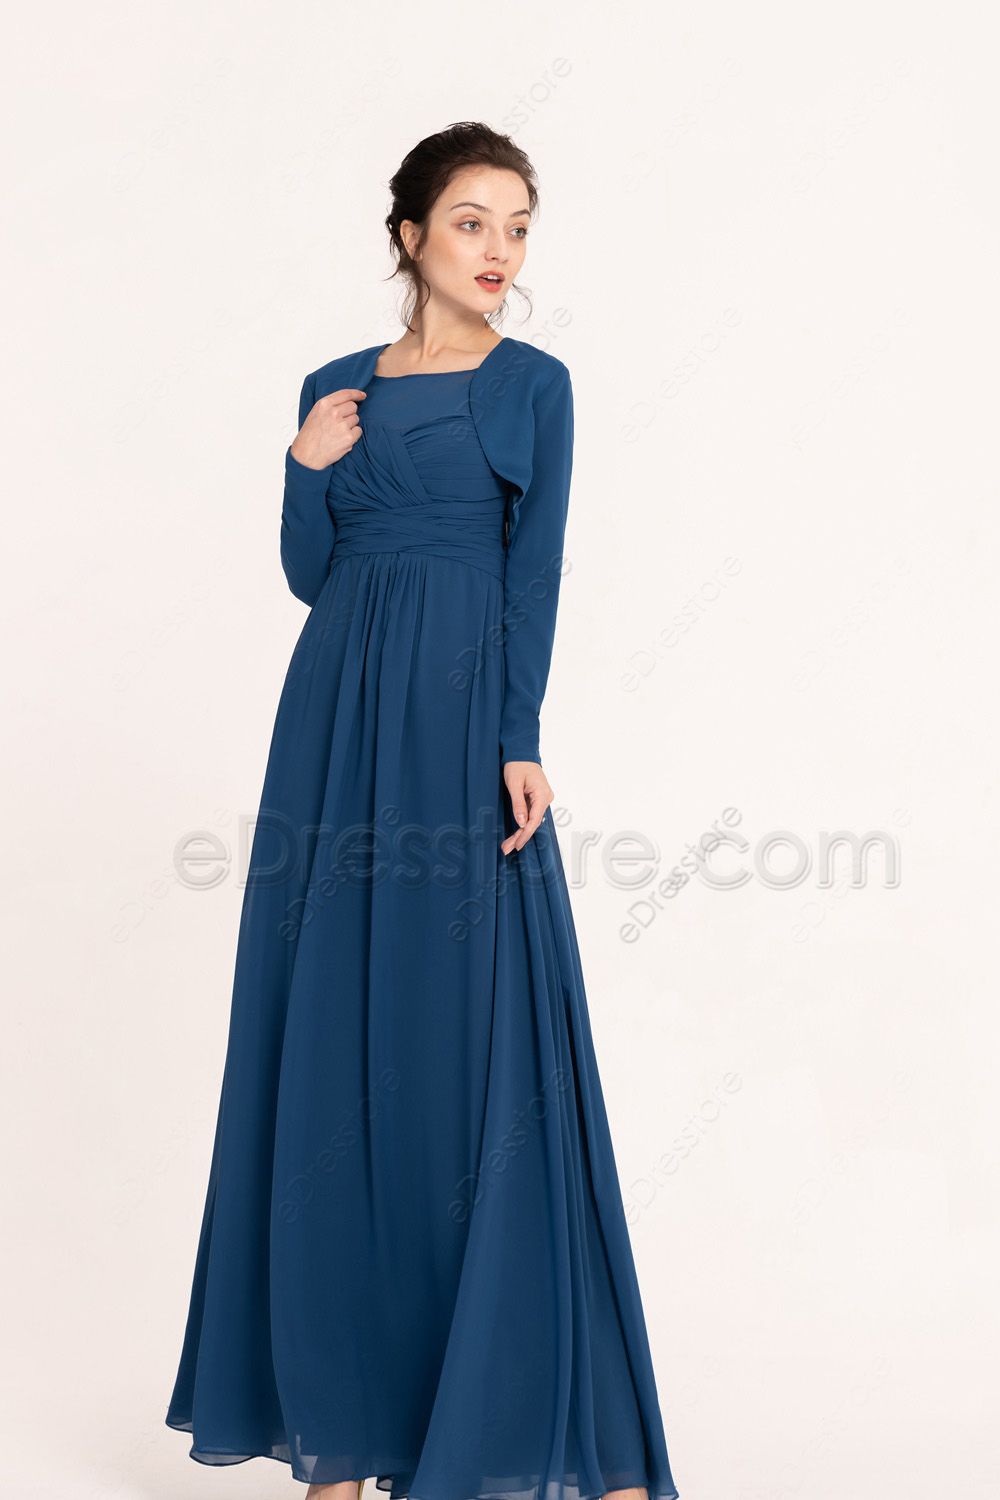 Modest Indigo Blue Bridesmaid Dresses with Long Sleeve Bolero | eDresstore